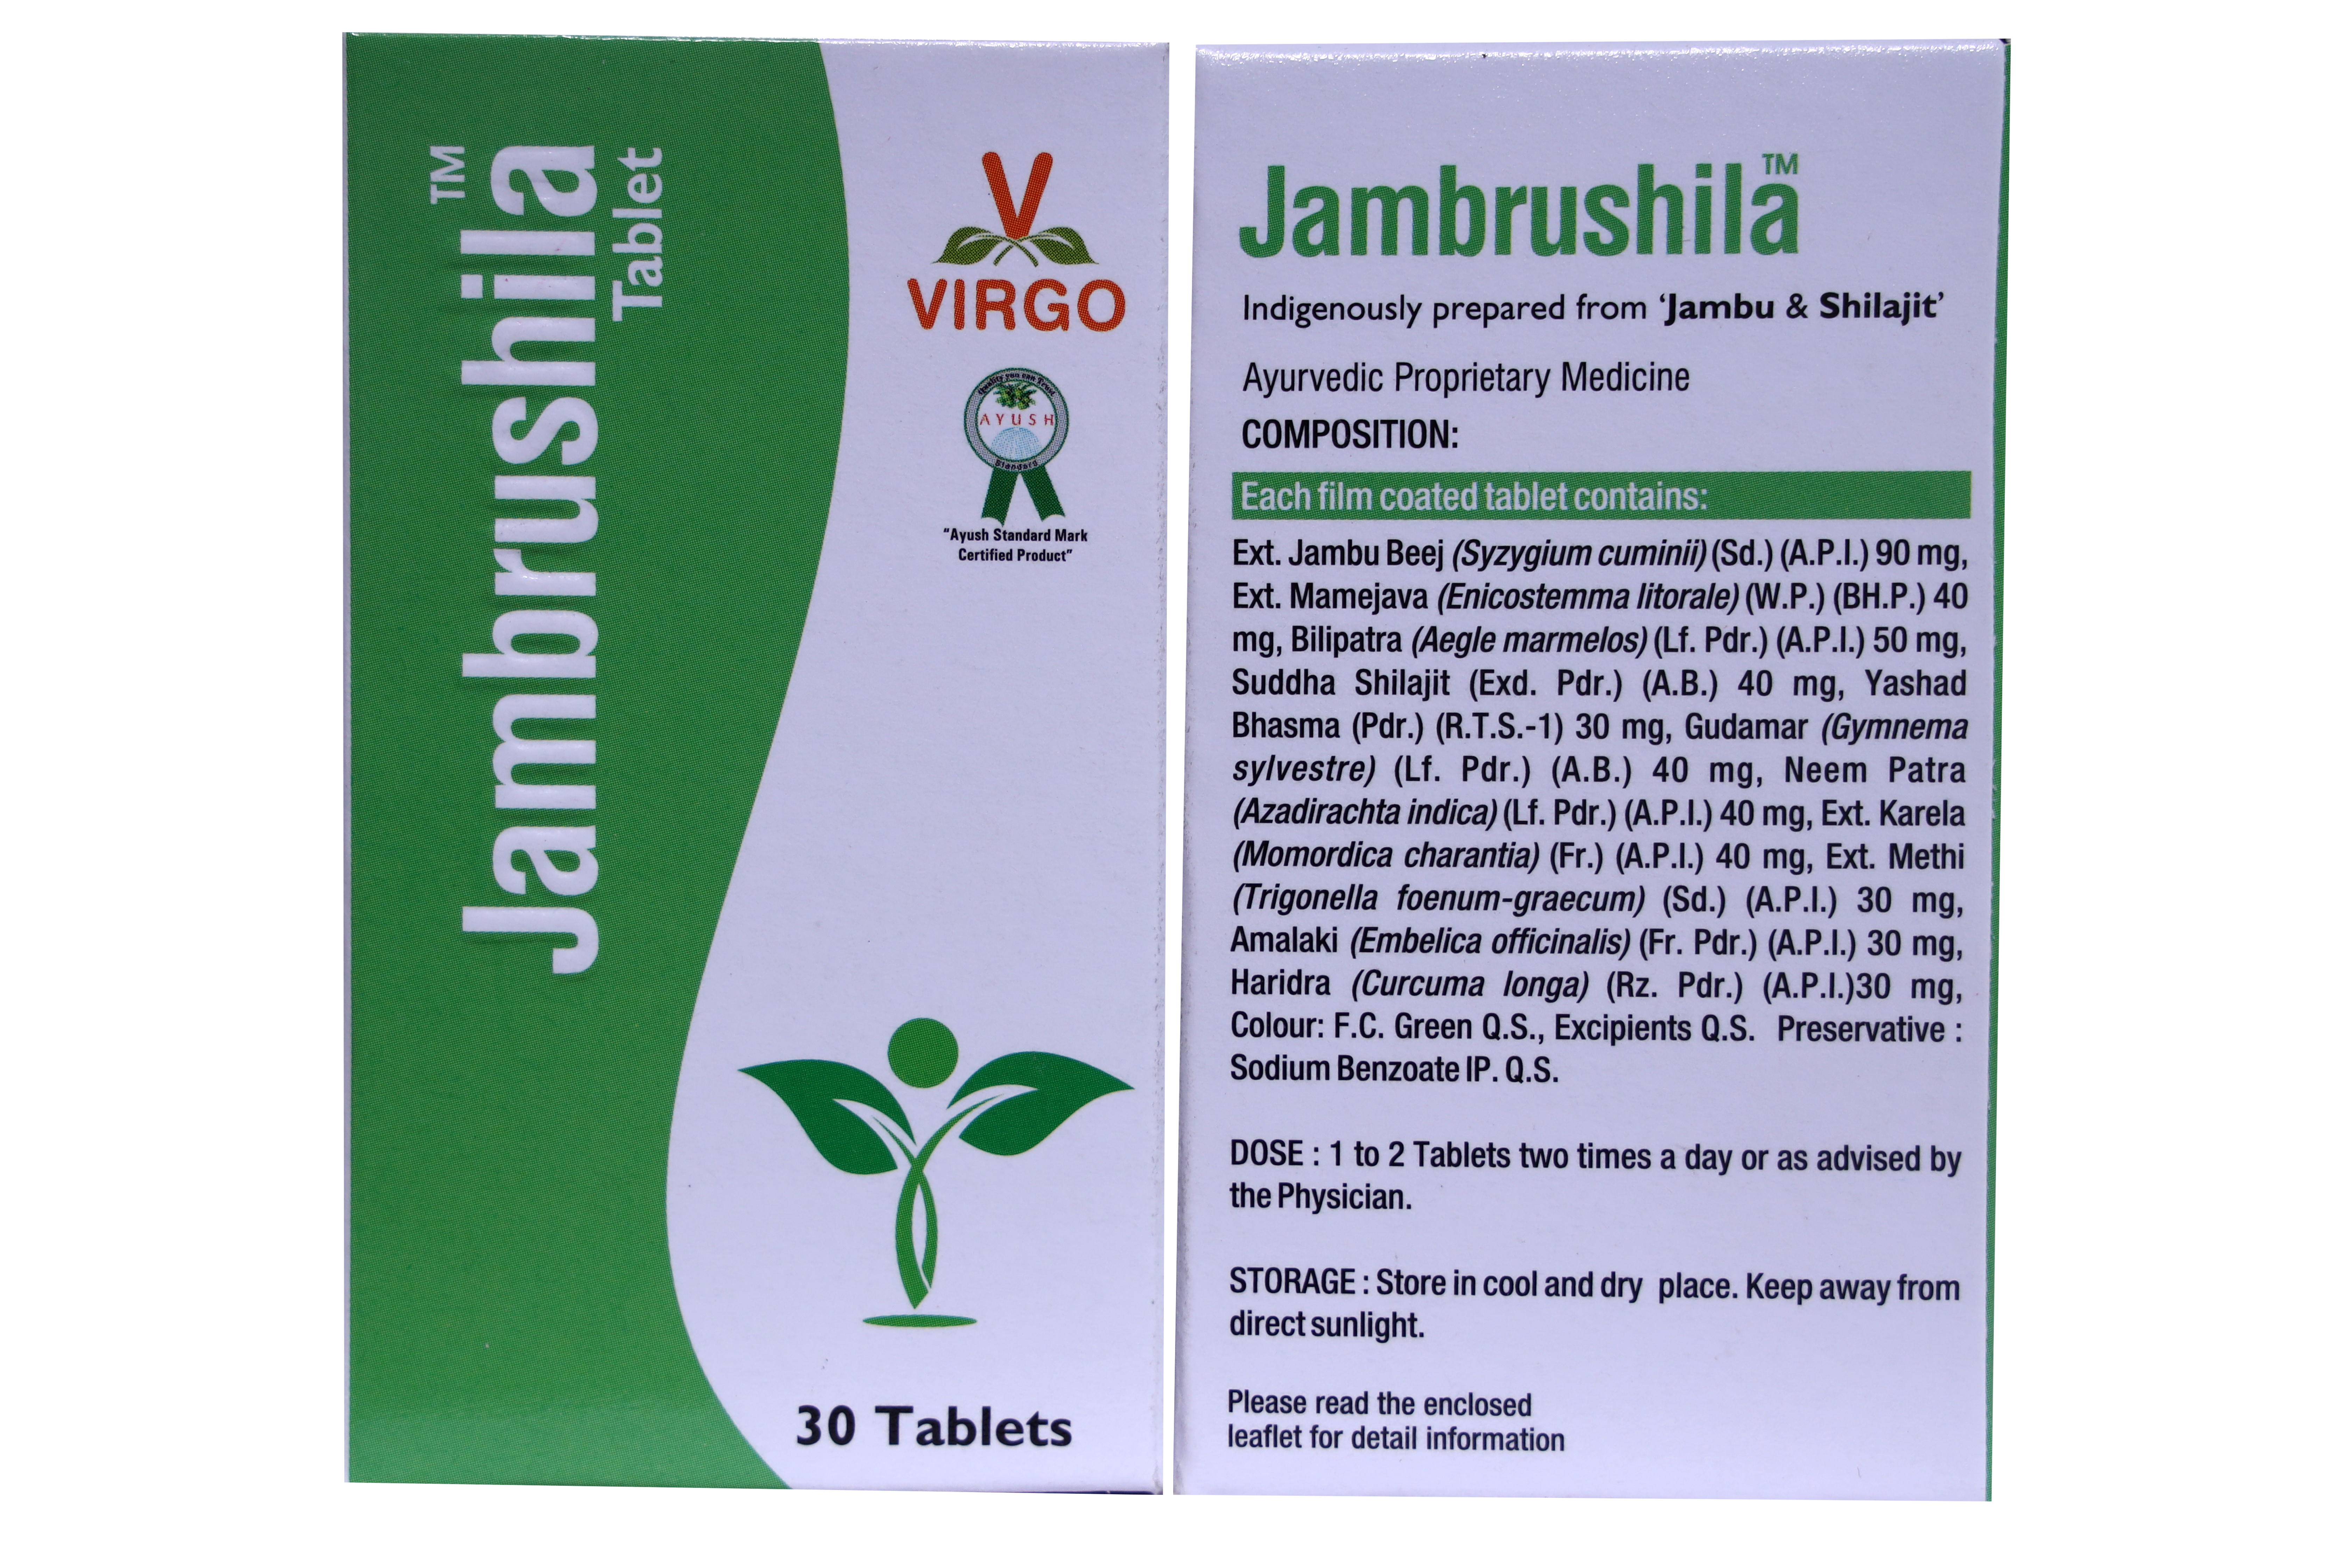 Buy Virgo Jambrushila Tablet at Best Price Online